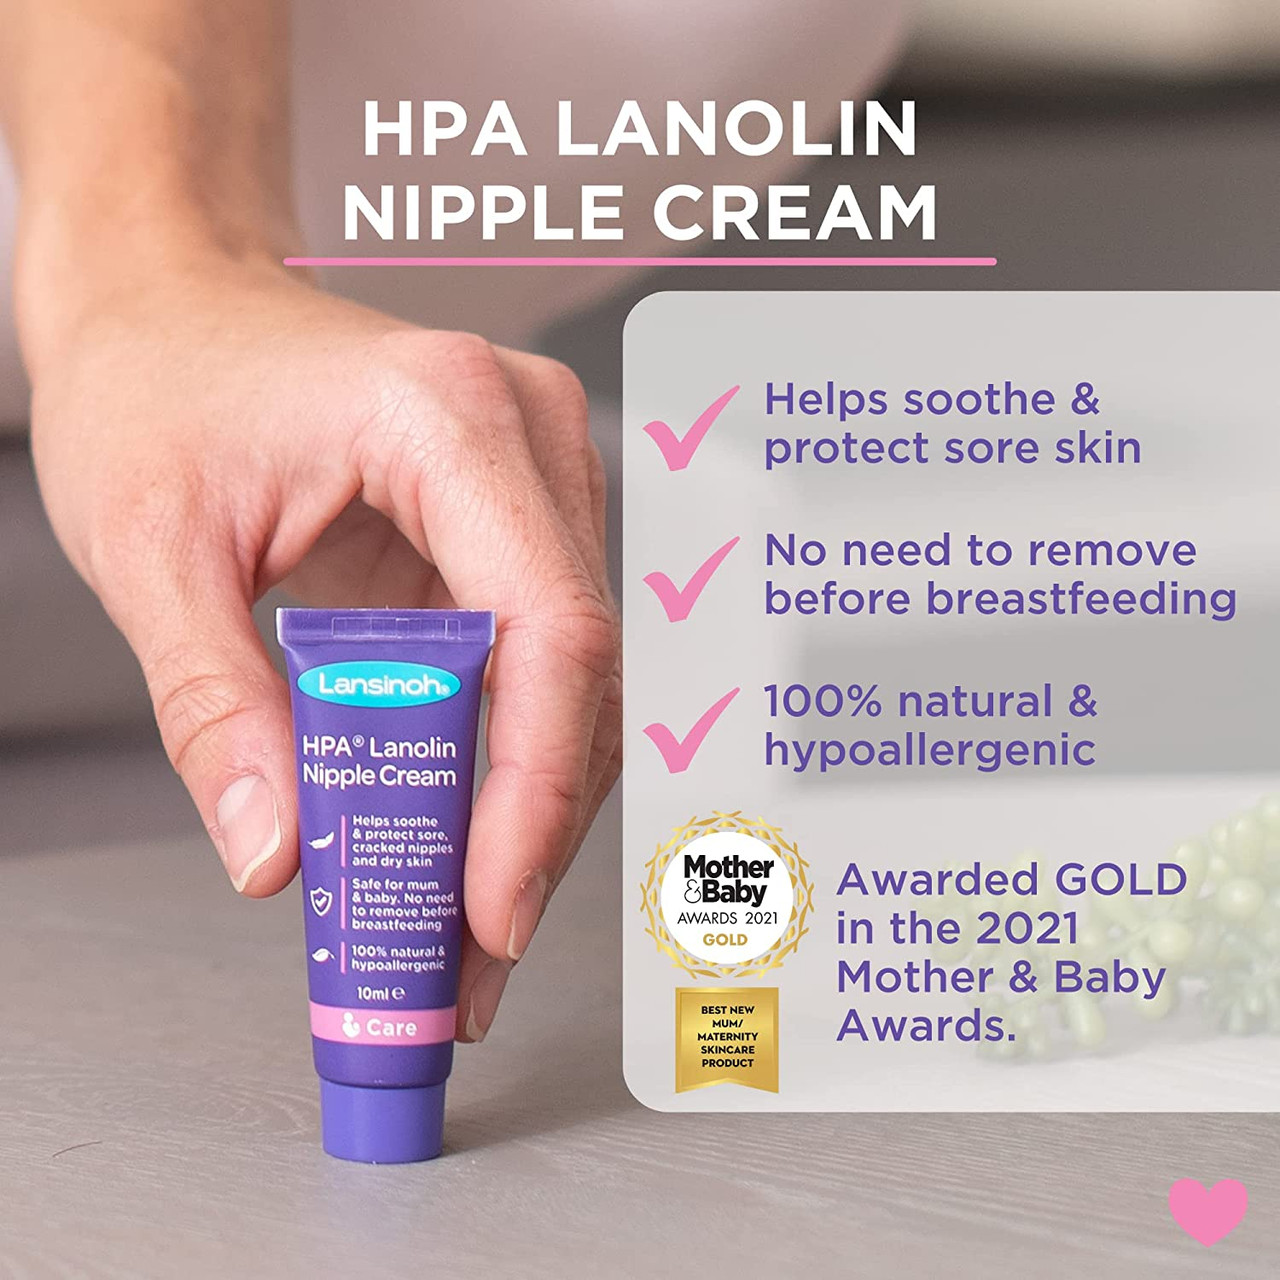 Ardo Care Lanolin - Soothes cracked breastfeeding nipples